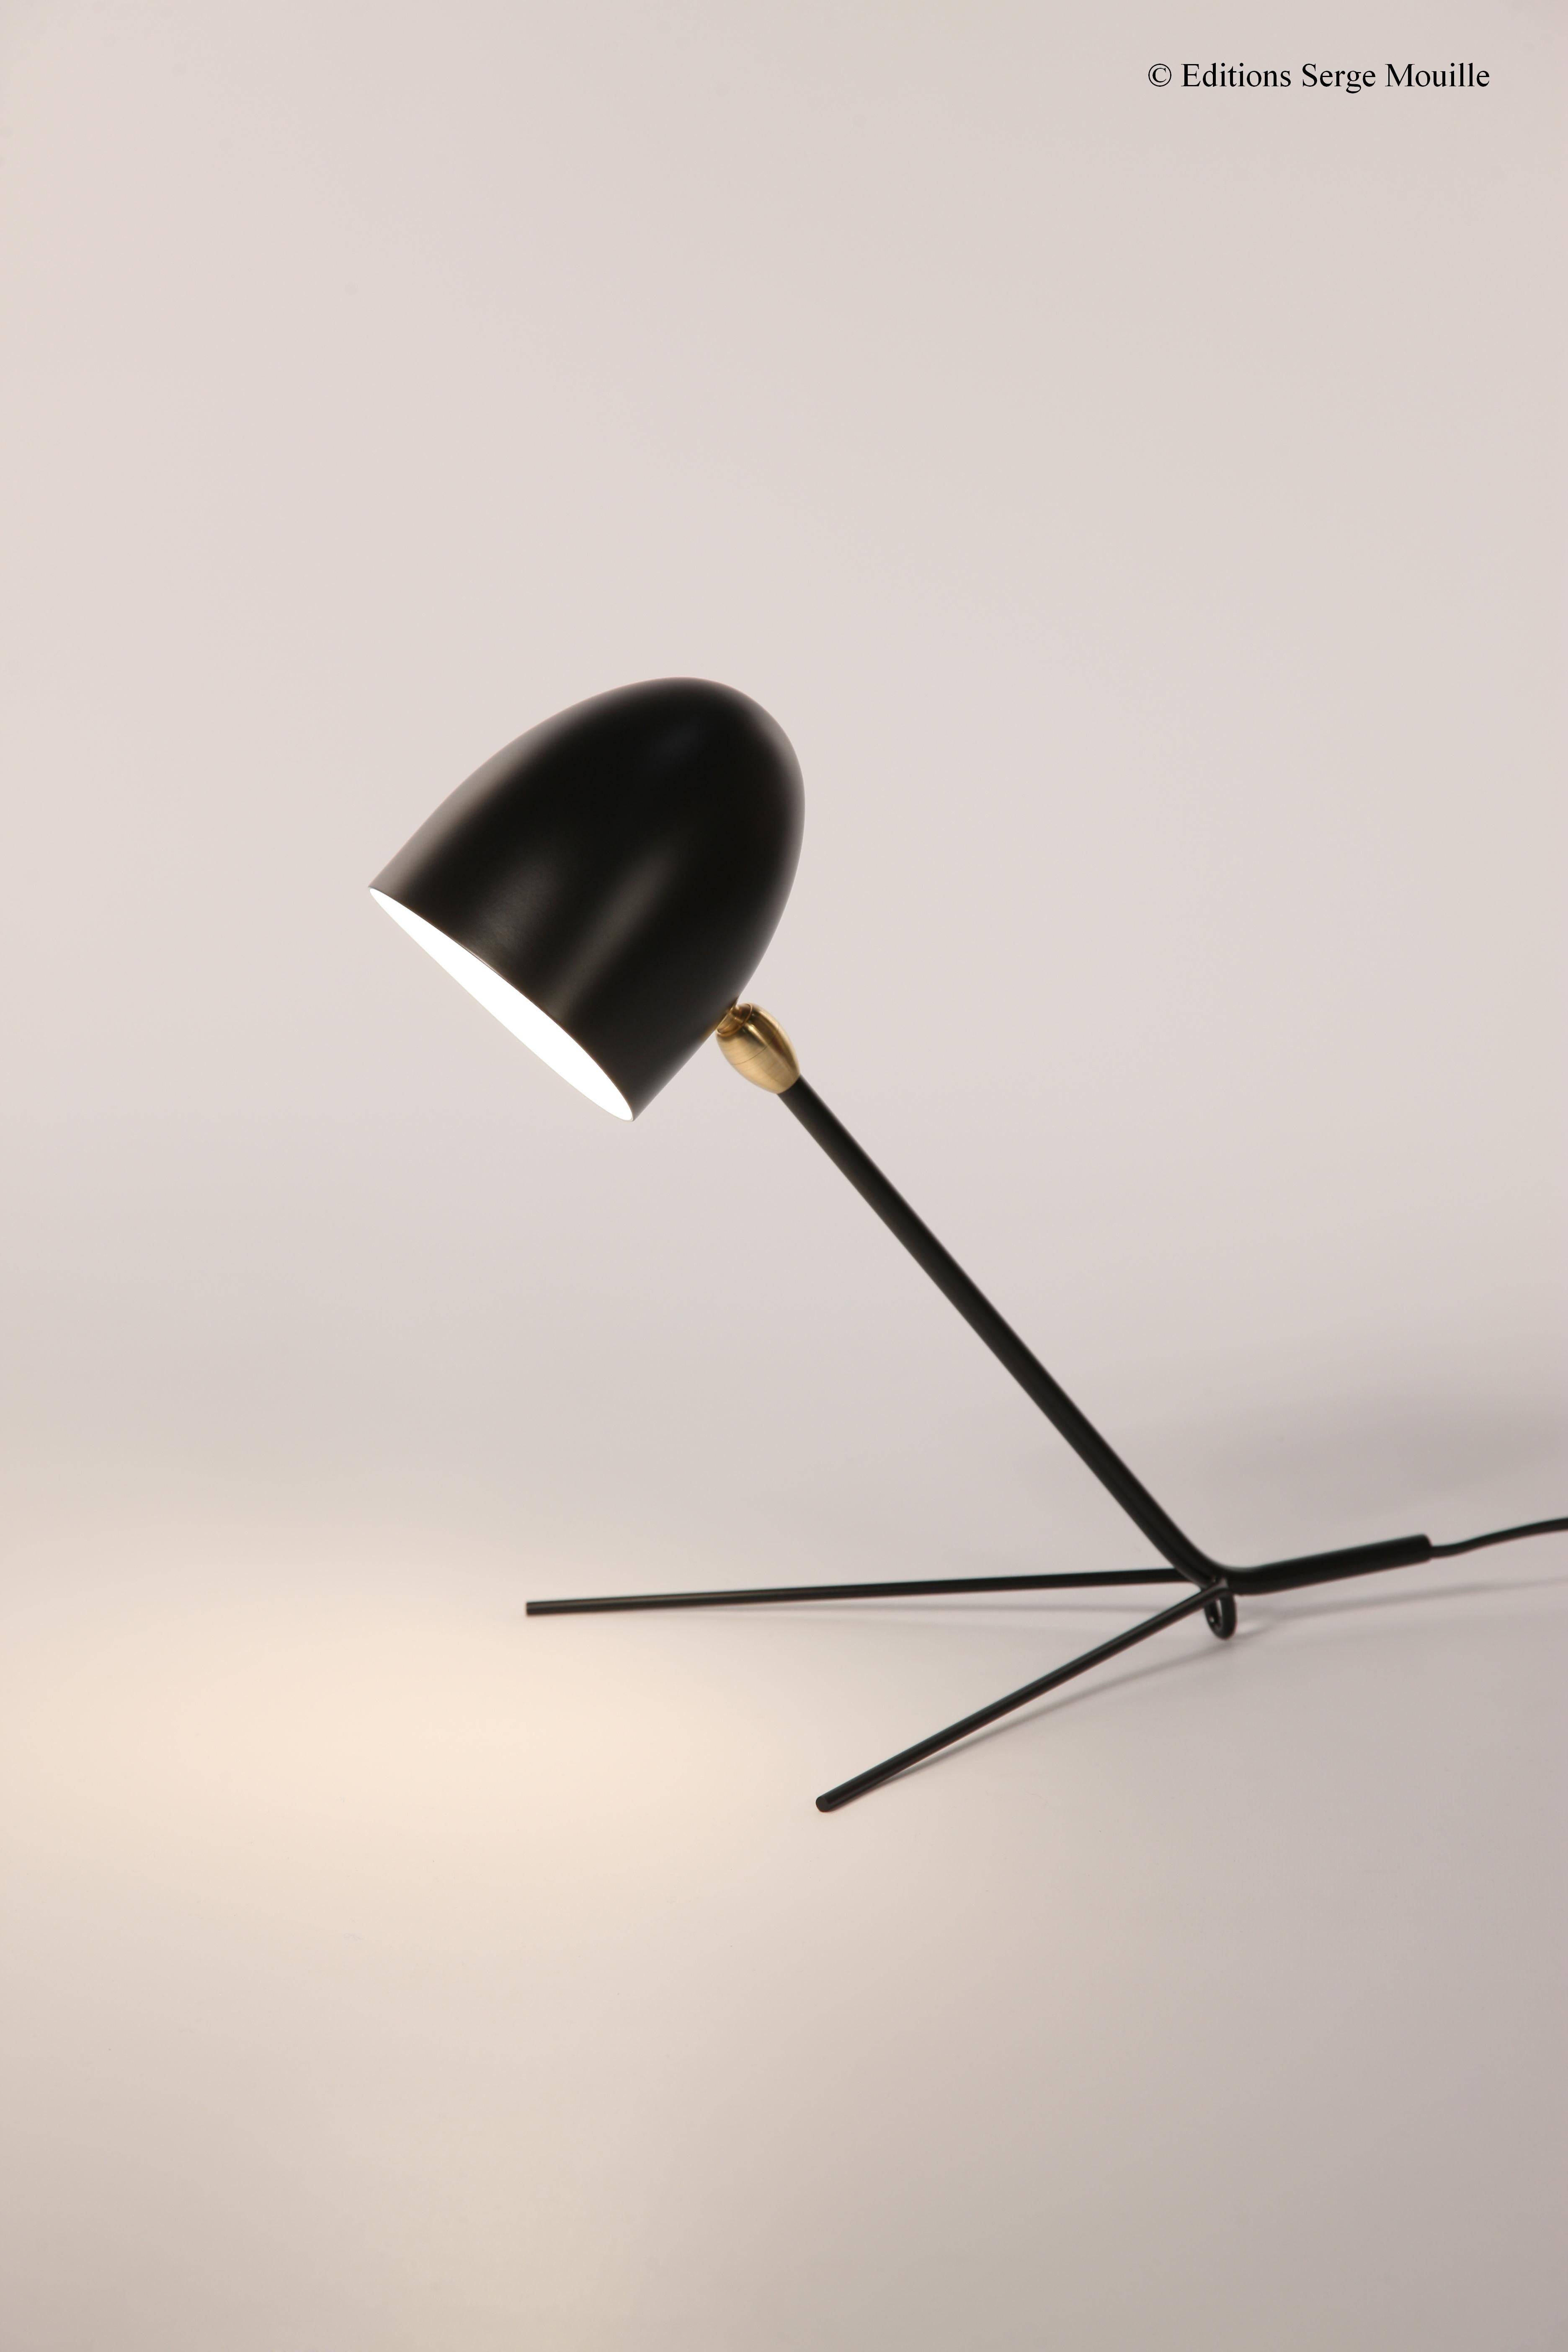 A Serge Mouille desk lamp model 